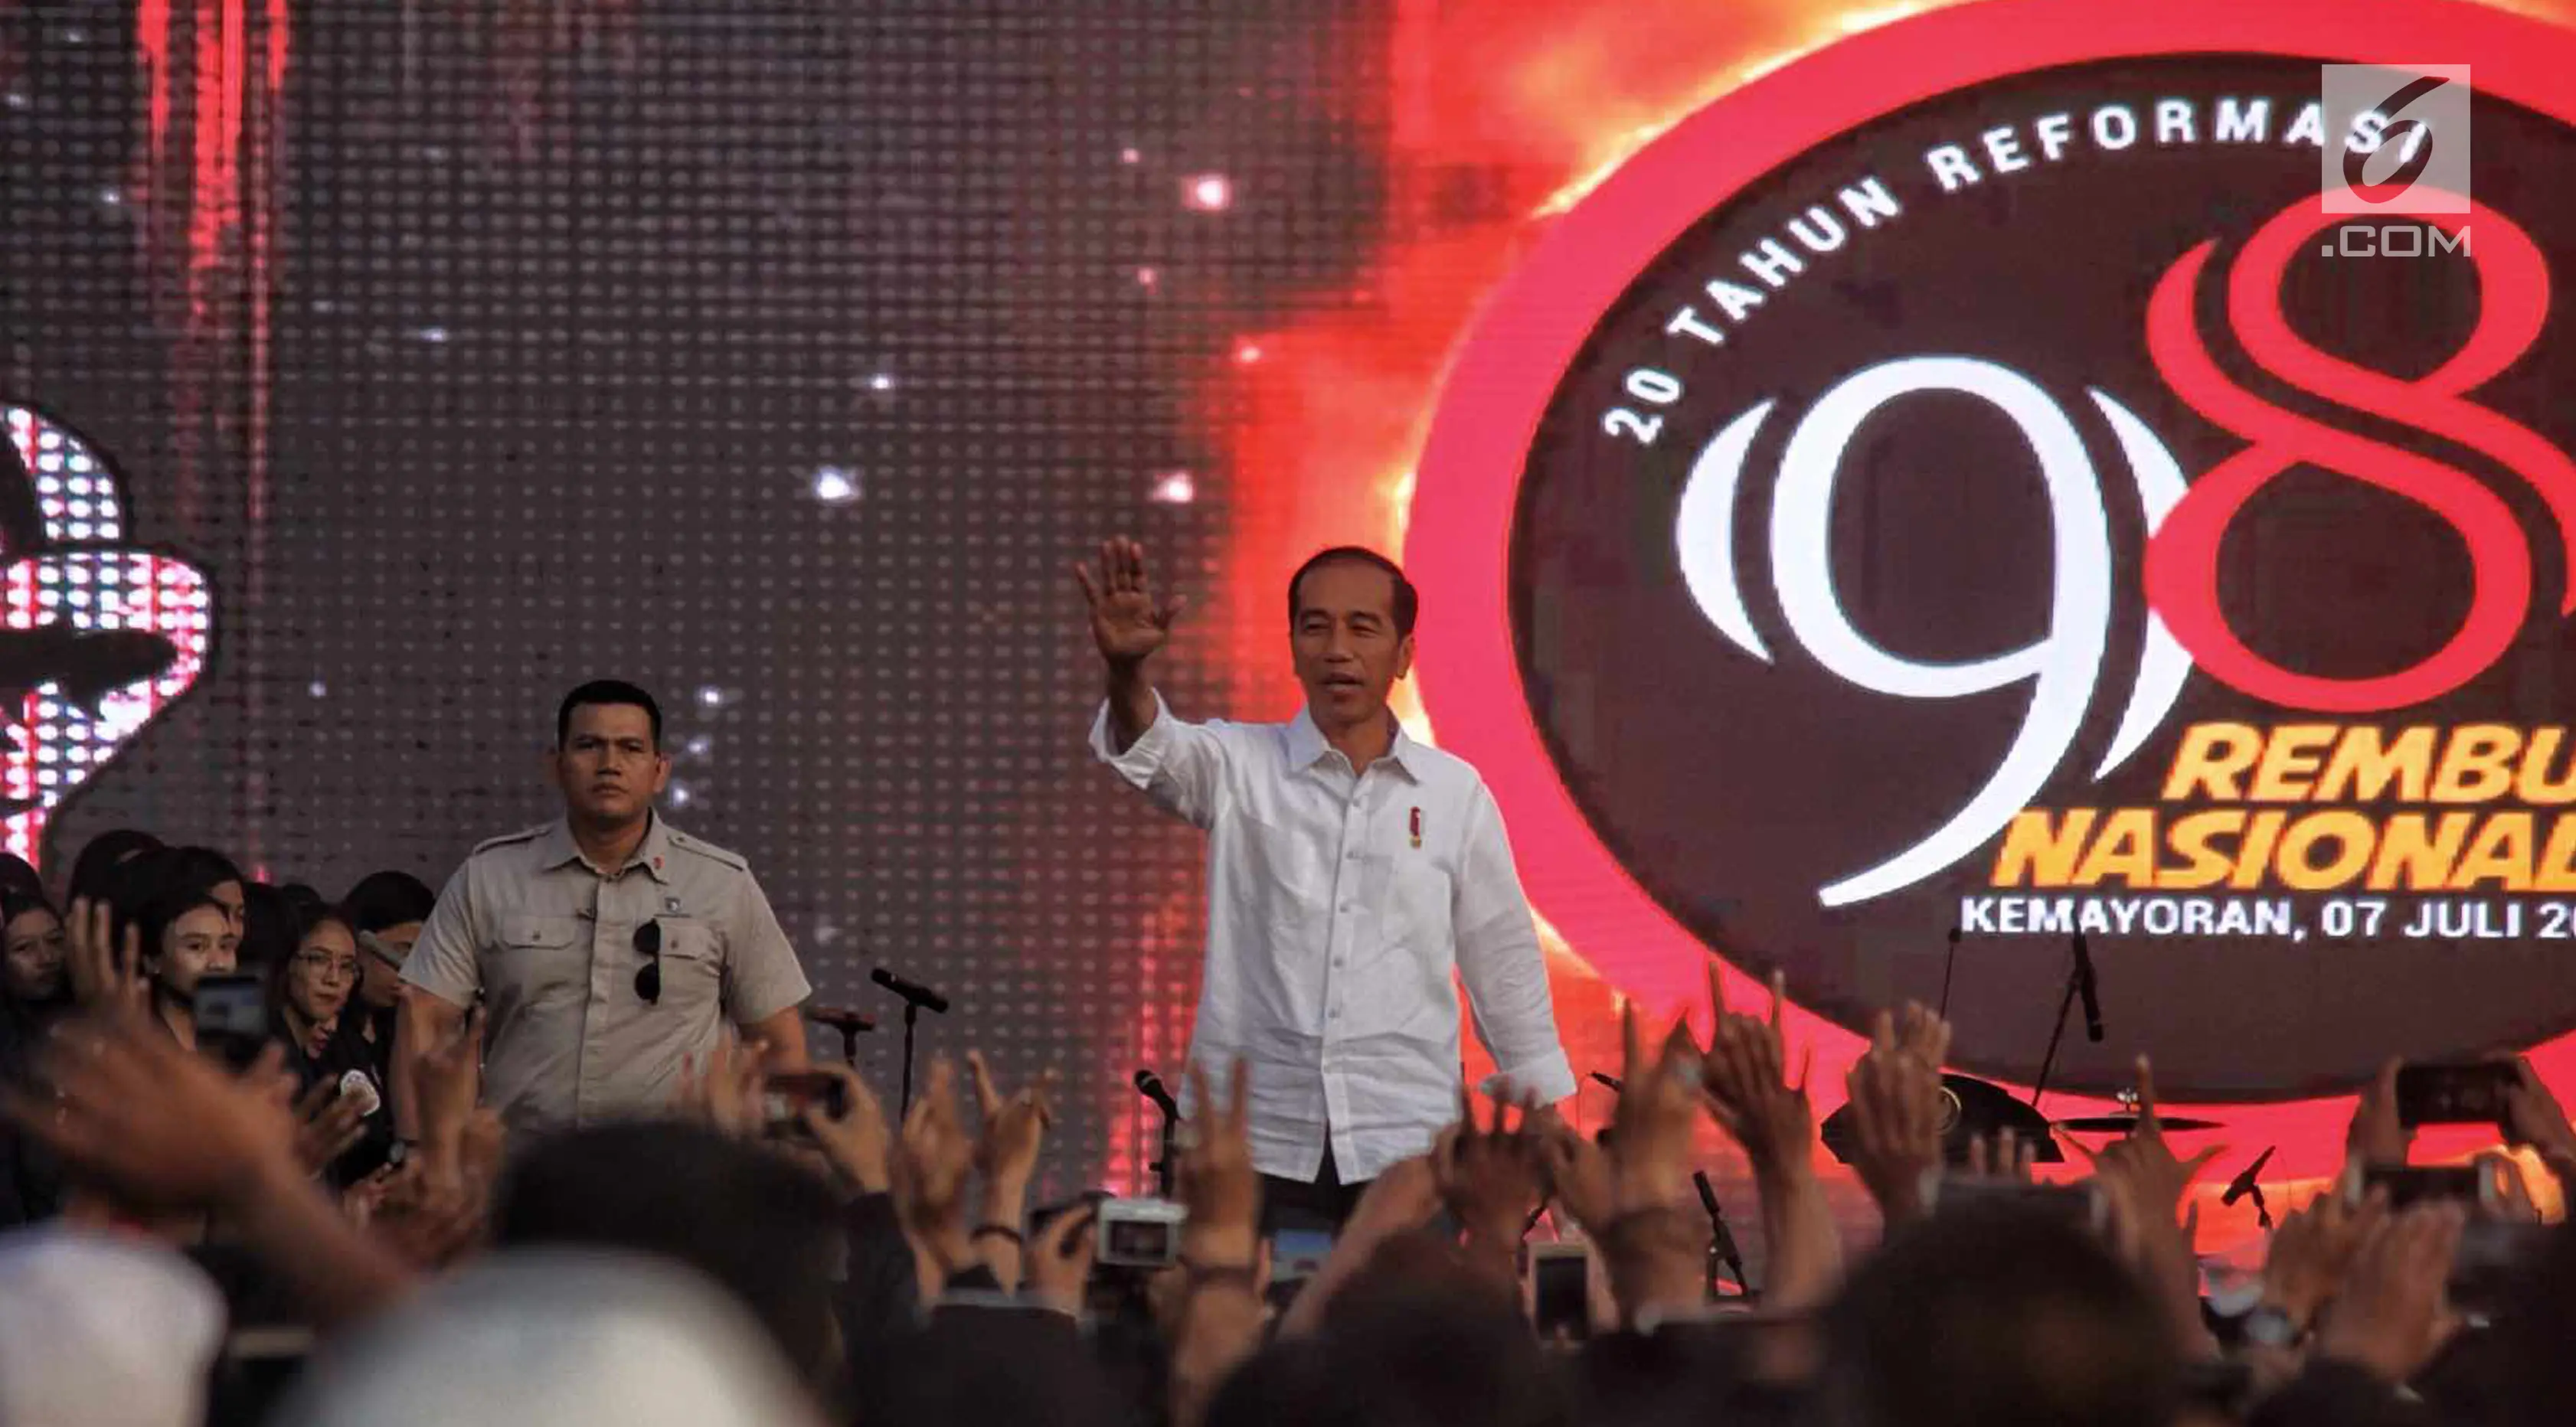 Presiden Joko Widodo (Jokowi) ketika menutup acara rembuk nasional aktivis '98 di Kemayoran, Jakarta, Sabtu (7/7). Dalam acara ini, para aktivis 98 mendeklarasikan dukungan ke Jokowi untuk memimpin dua periode. (Liputan6.com/Faizal Fanani)